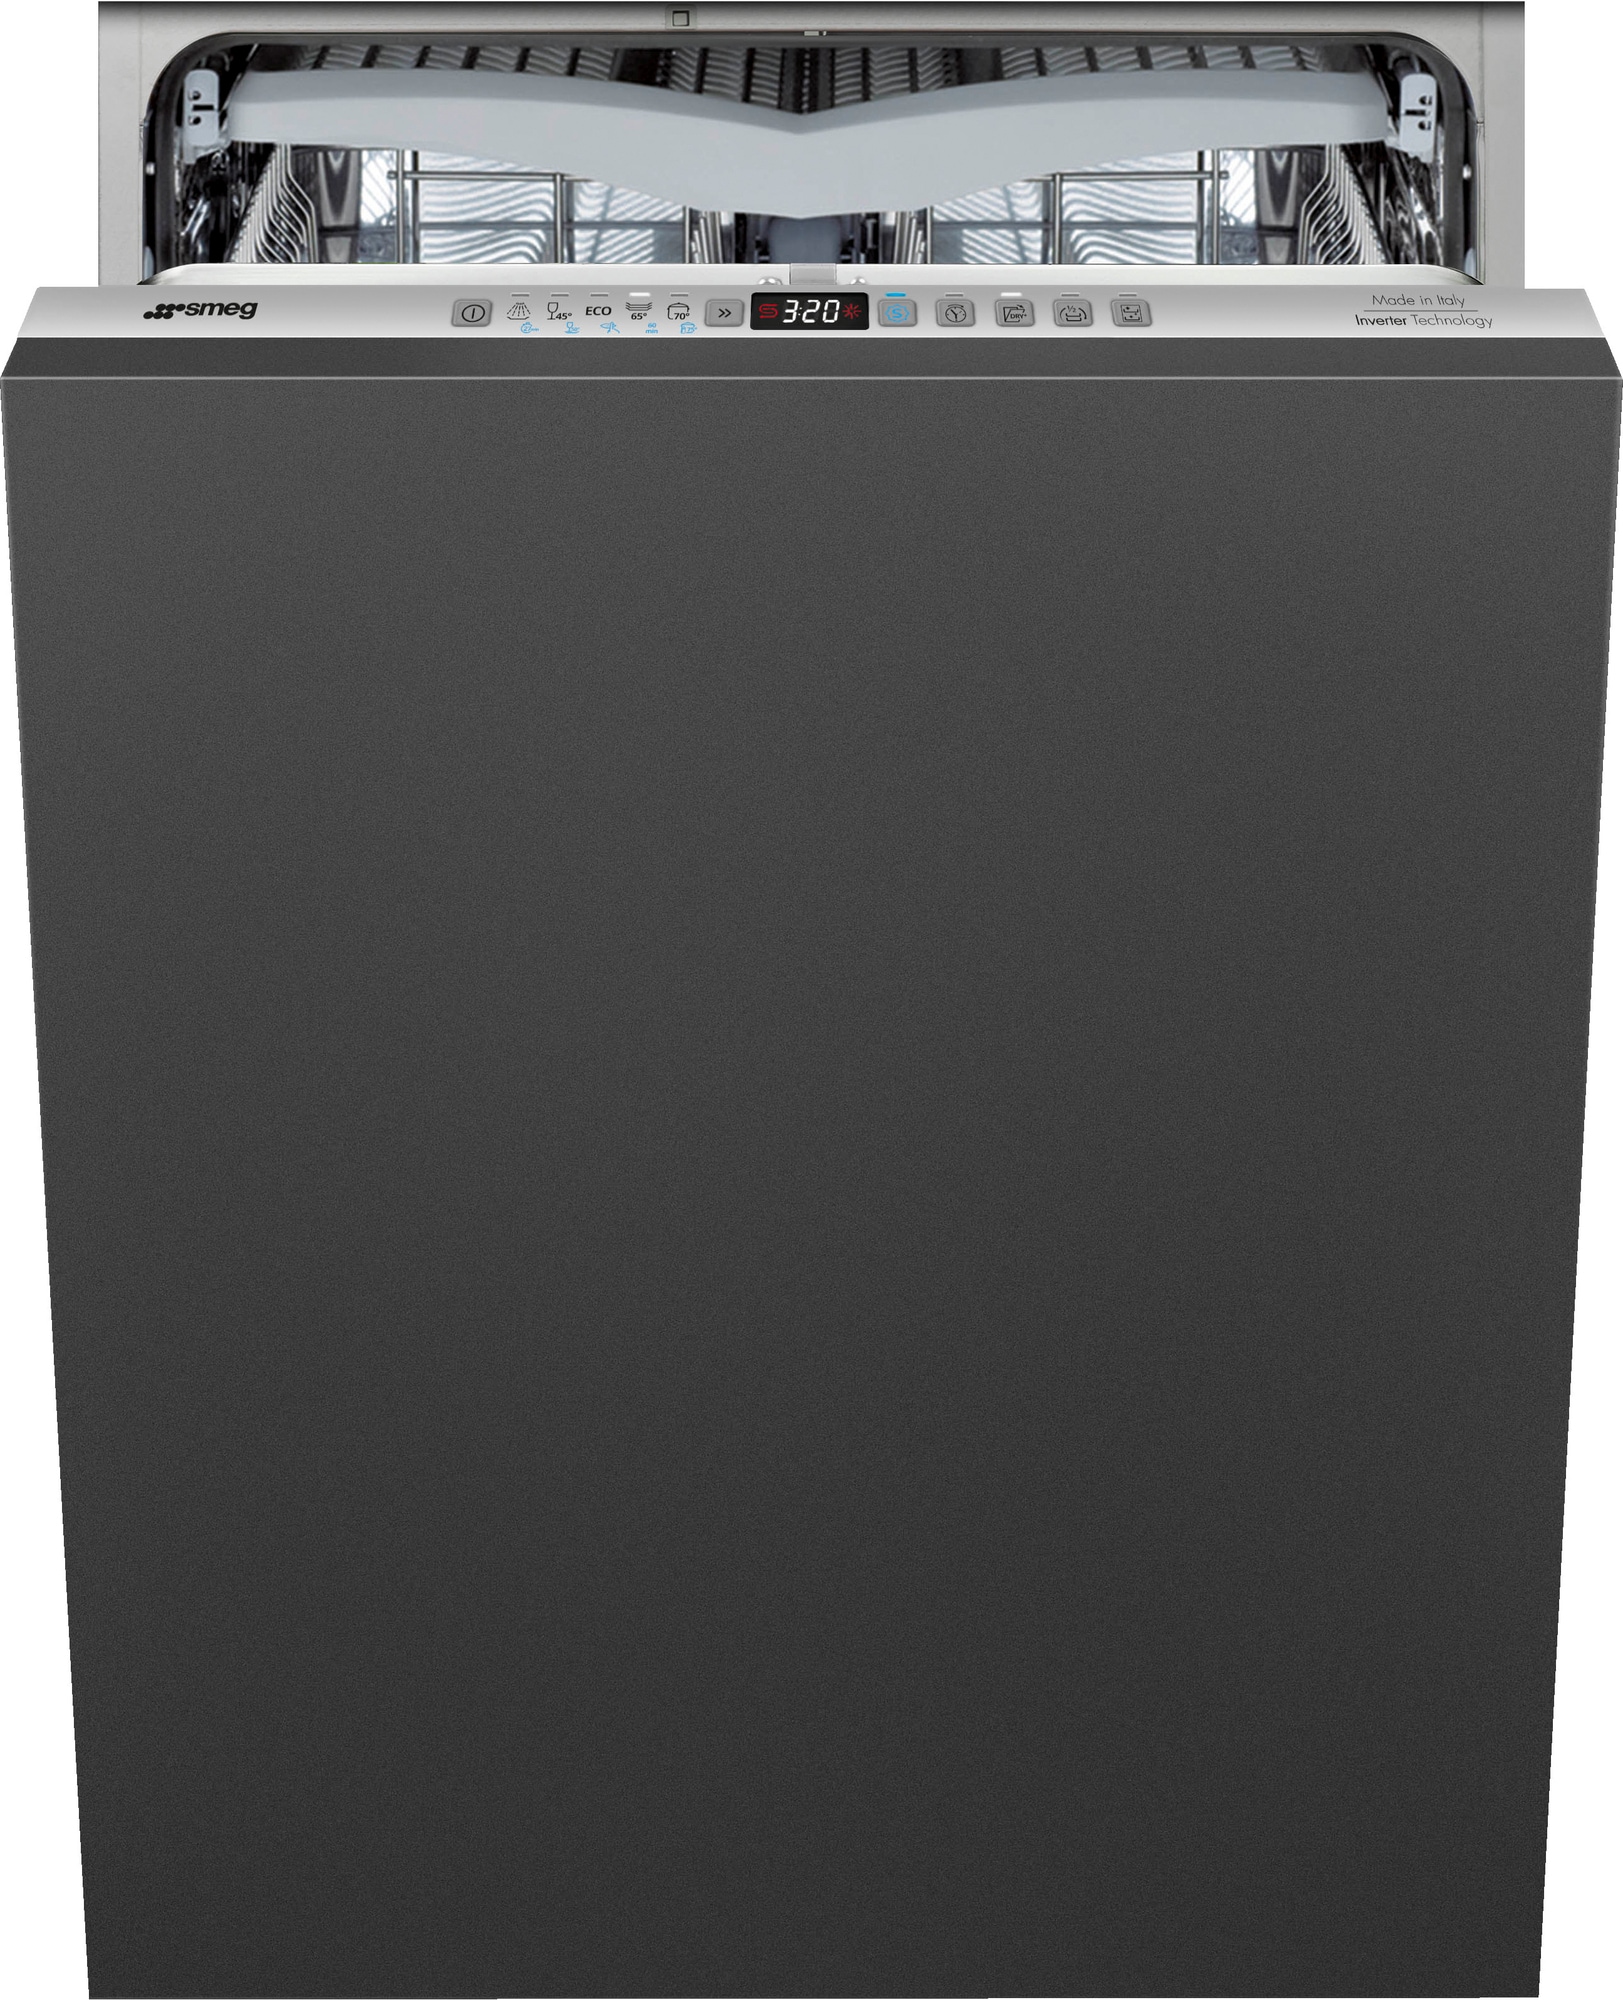 Smeg opvaskemaskine STL332CH (silver) - Spar 20-40% på Hvidevarerpriser.dk  - Sammenlign priser